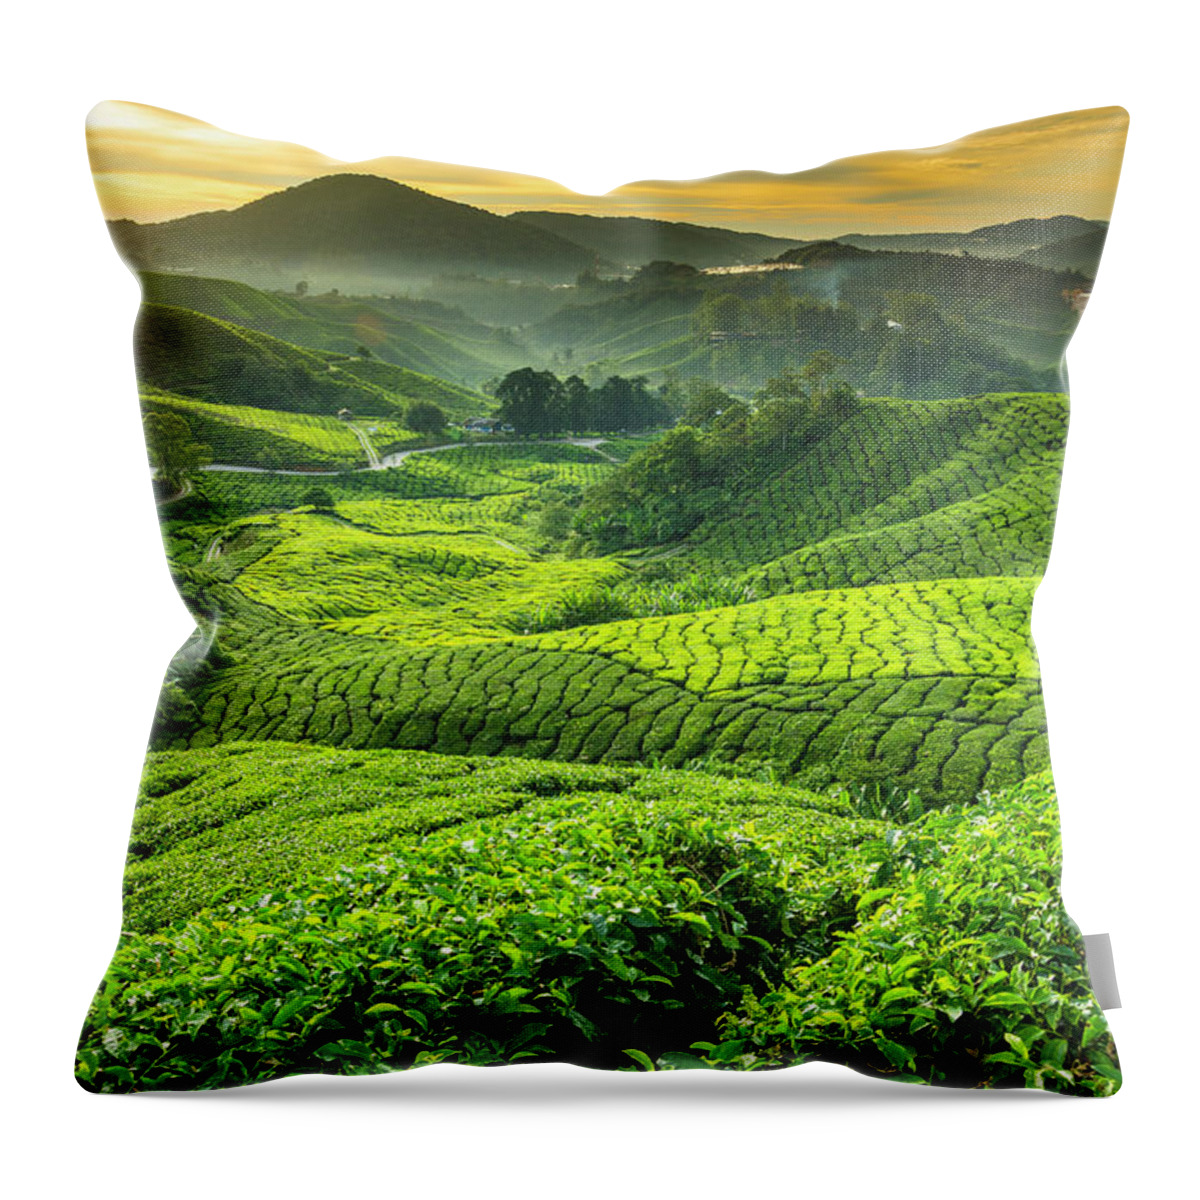 Cameron Highlands Throw Pillow featuring the photograph Malaysia, Pahang, Cameron Highlands by Cescassawin